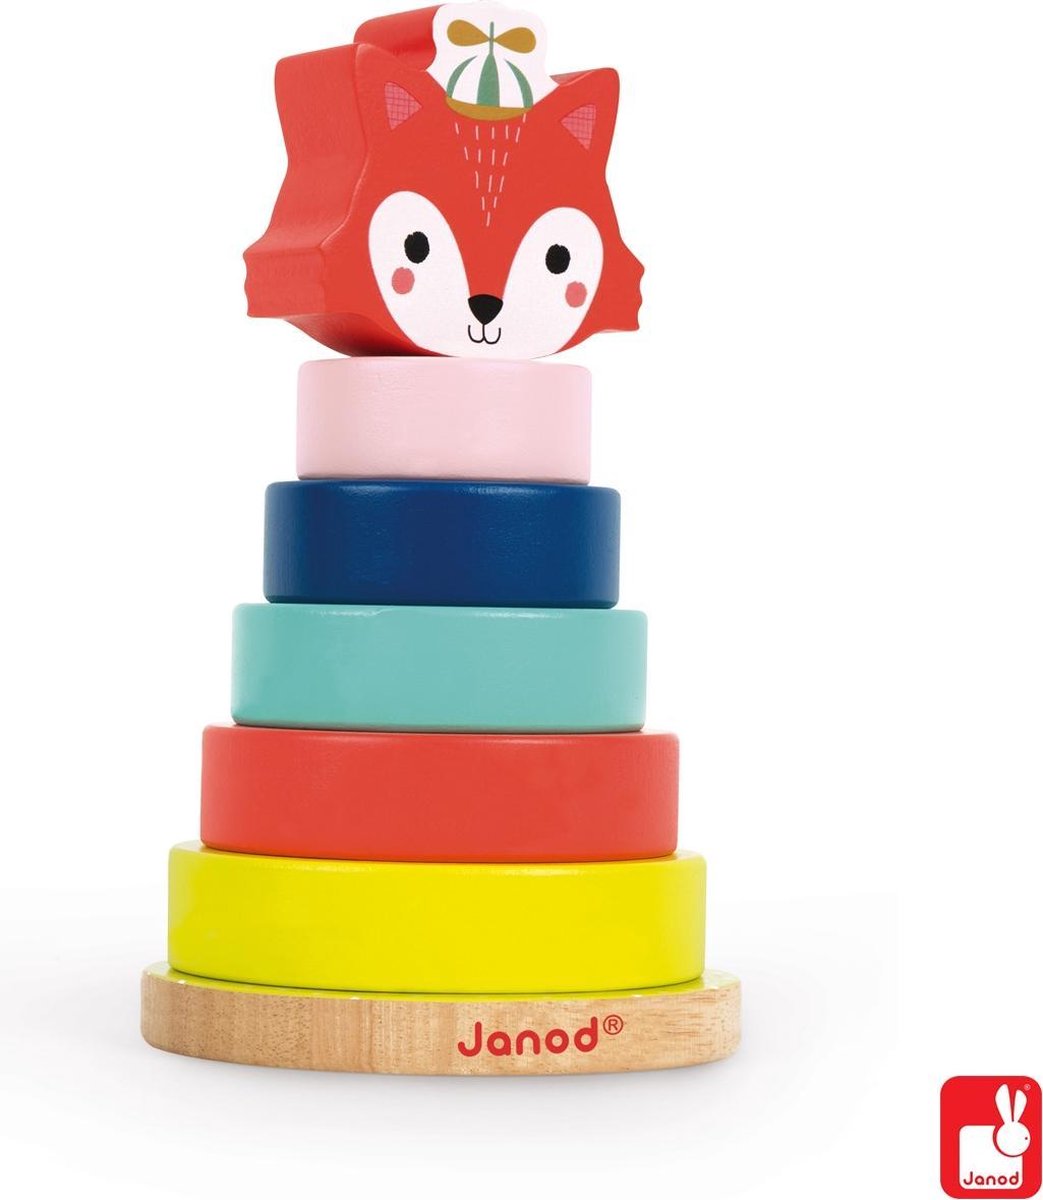 JANOD J08014 jouet d'apprentissage | bol.com